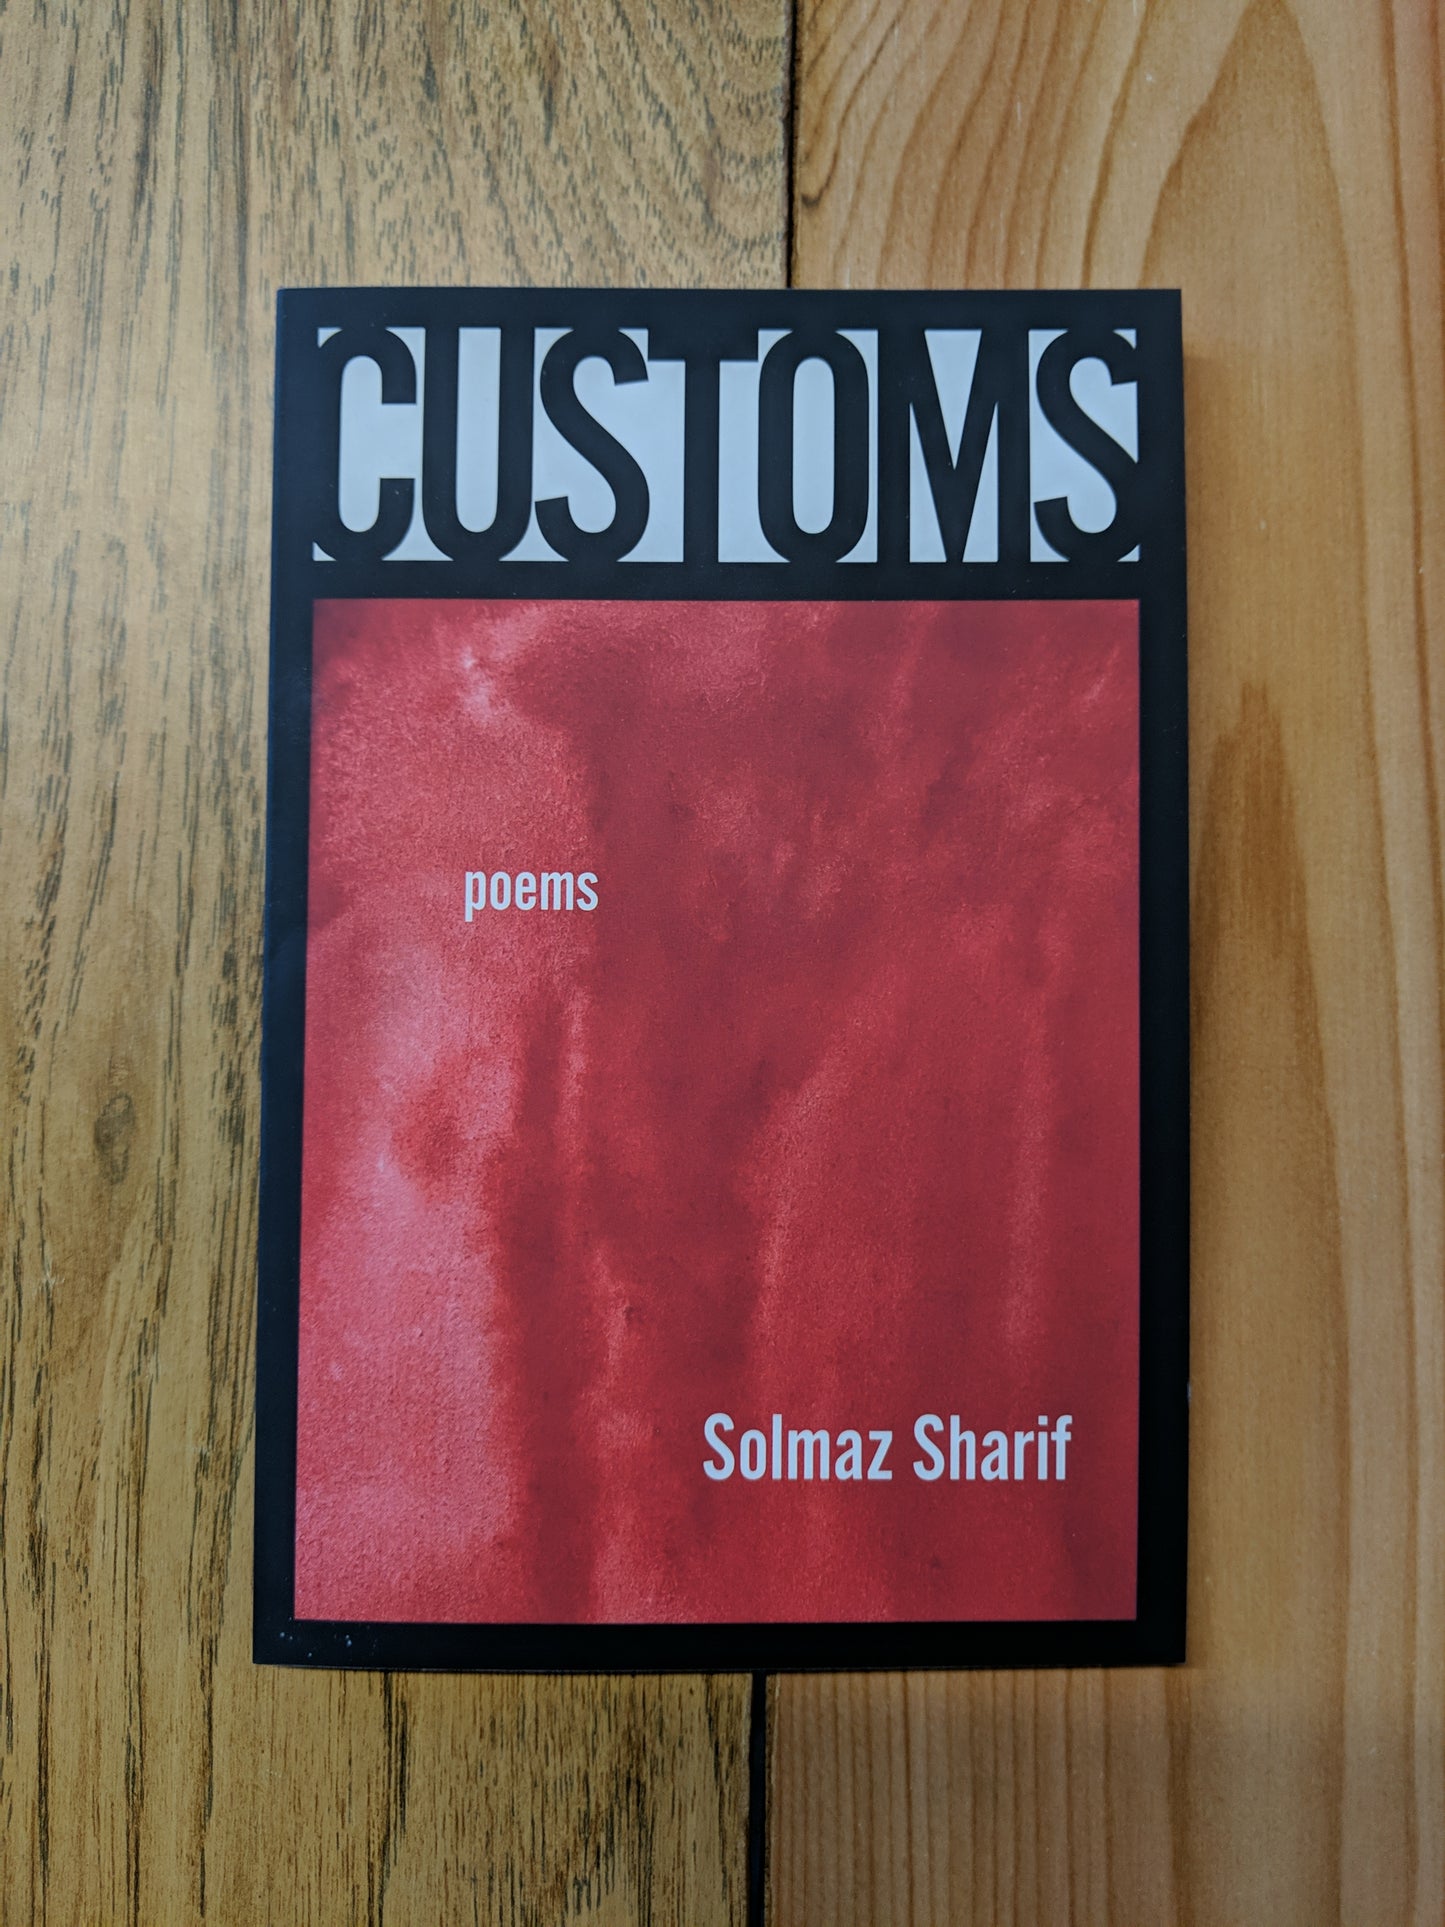 Customs: Poems